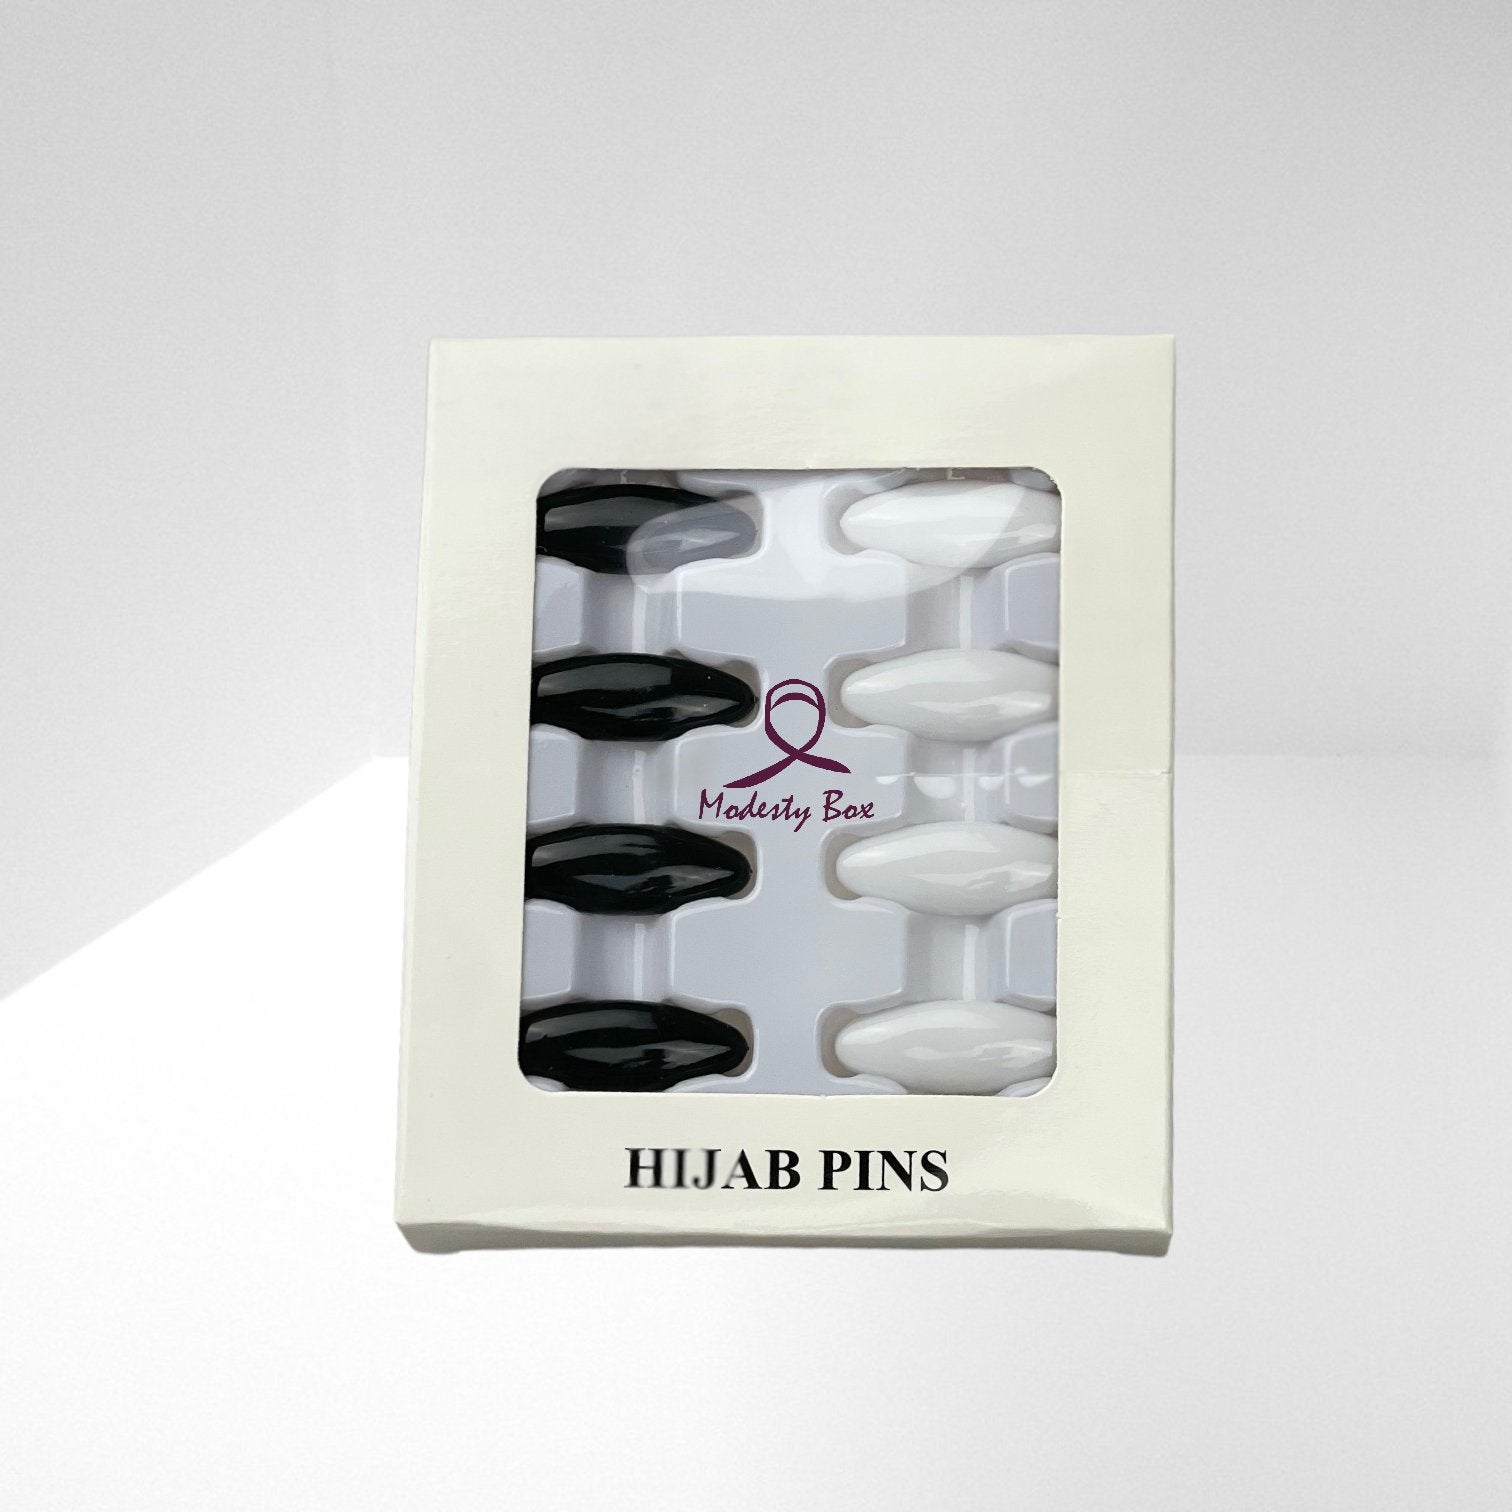 Black & White Hijab Pins - Modesty Box